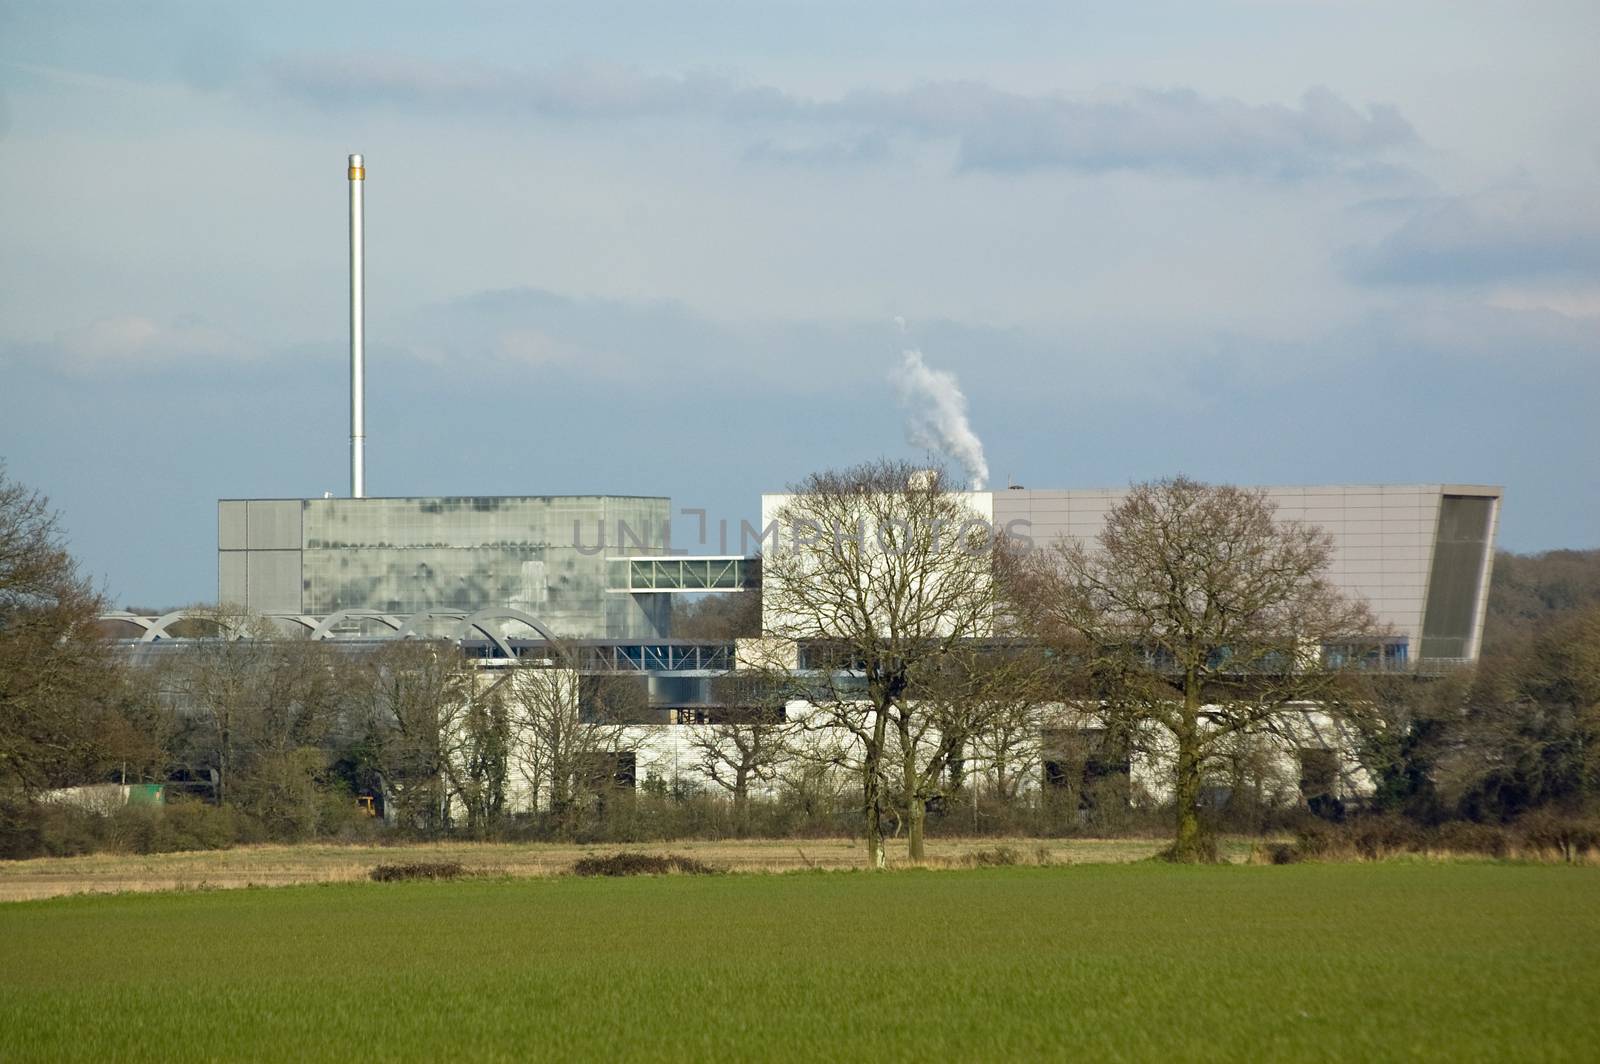 The large energy from waste incinerator plant at Chineham, Basingstoke, Hampshire.